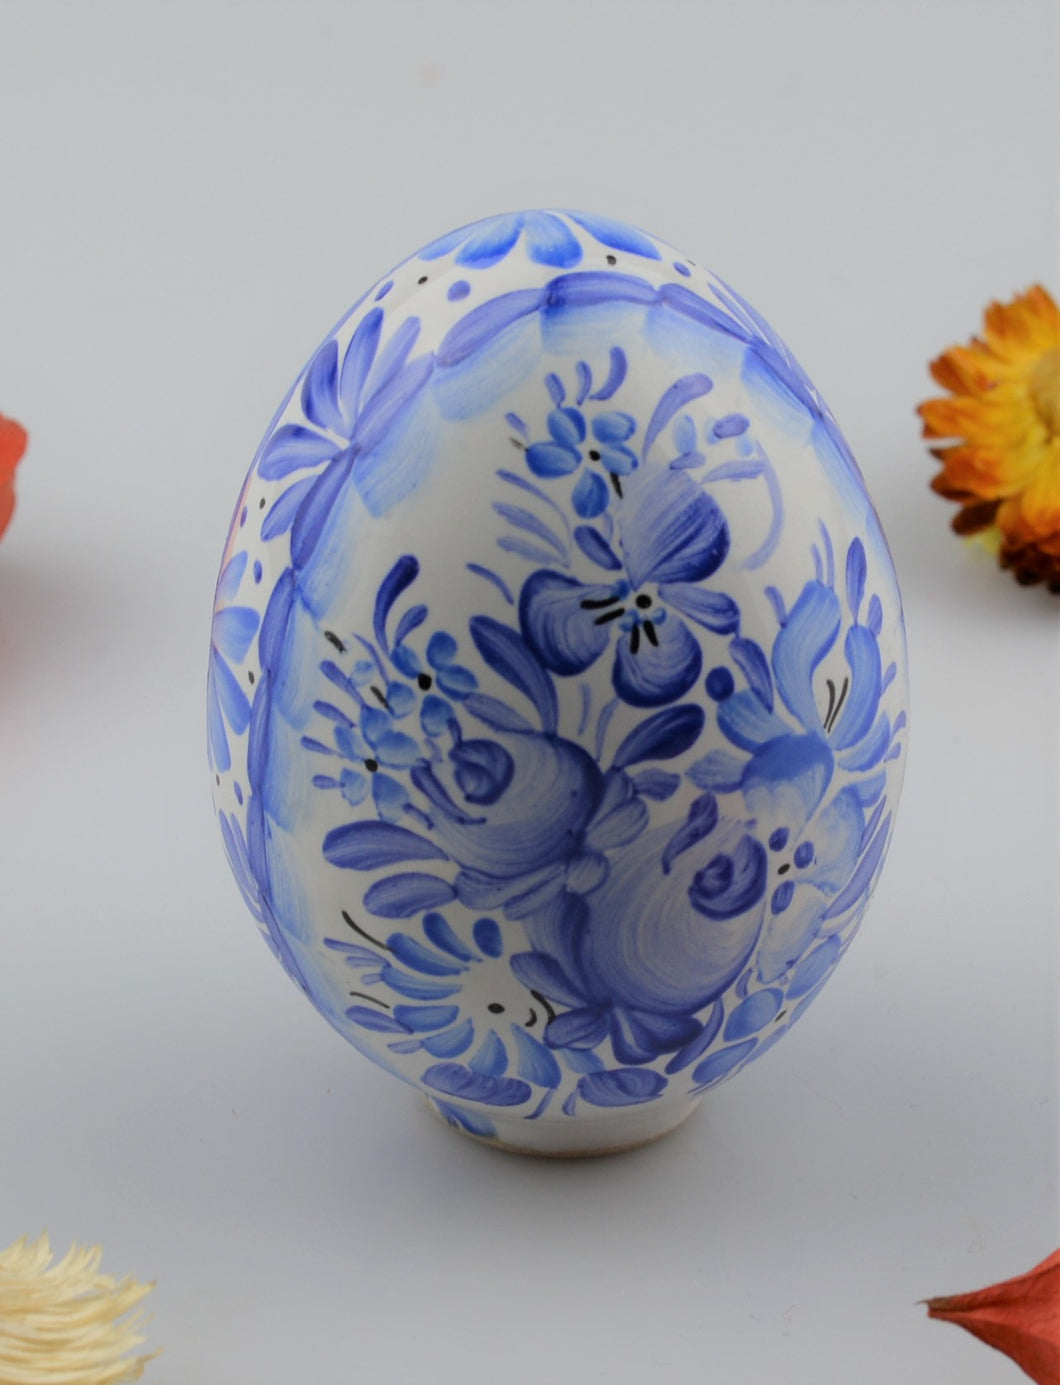 Ceramic egg - hand painted